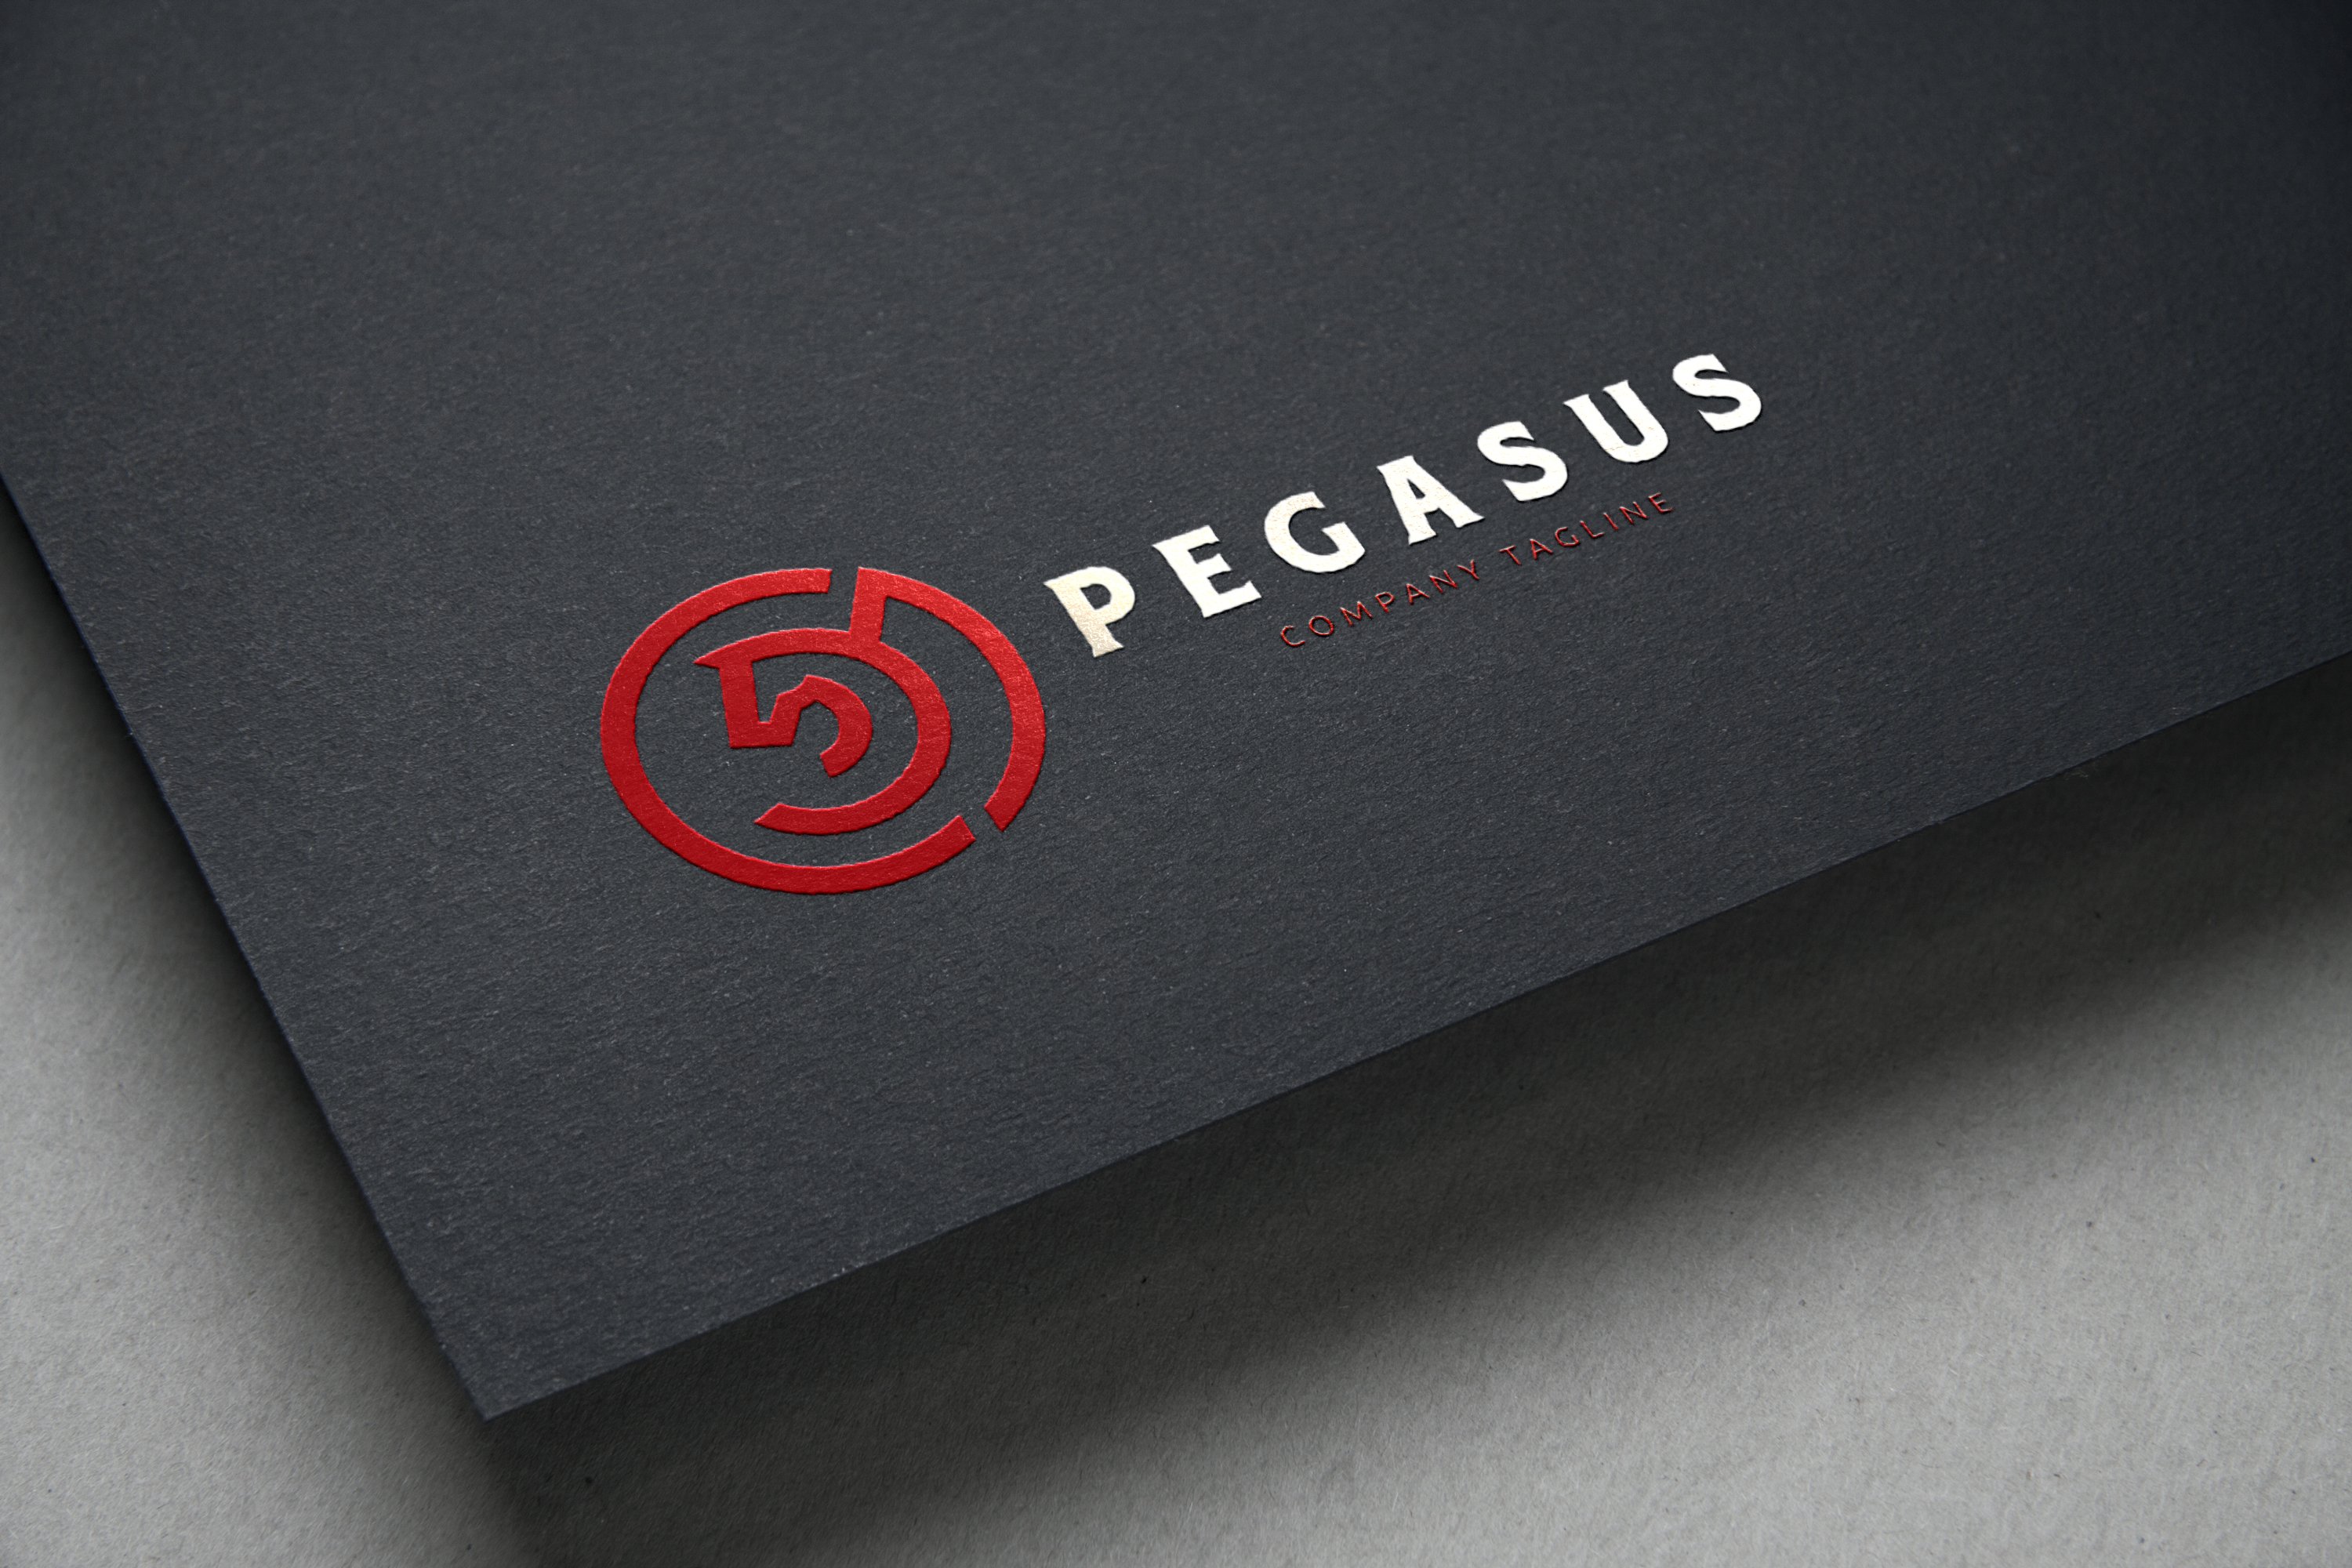 Pegasus Logo preview image.